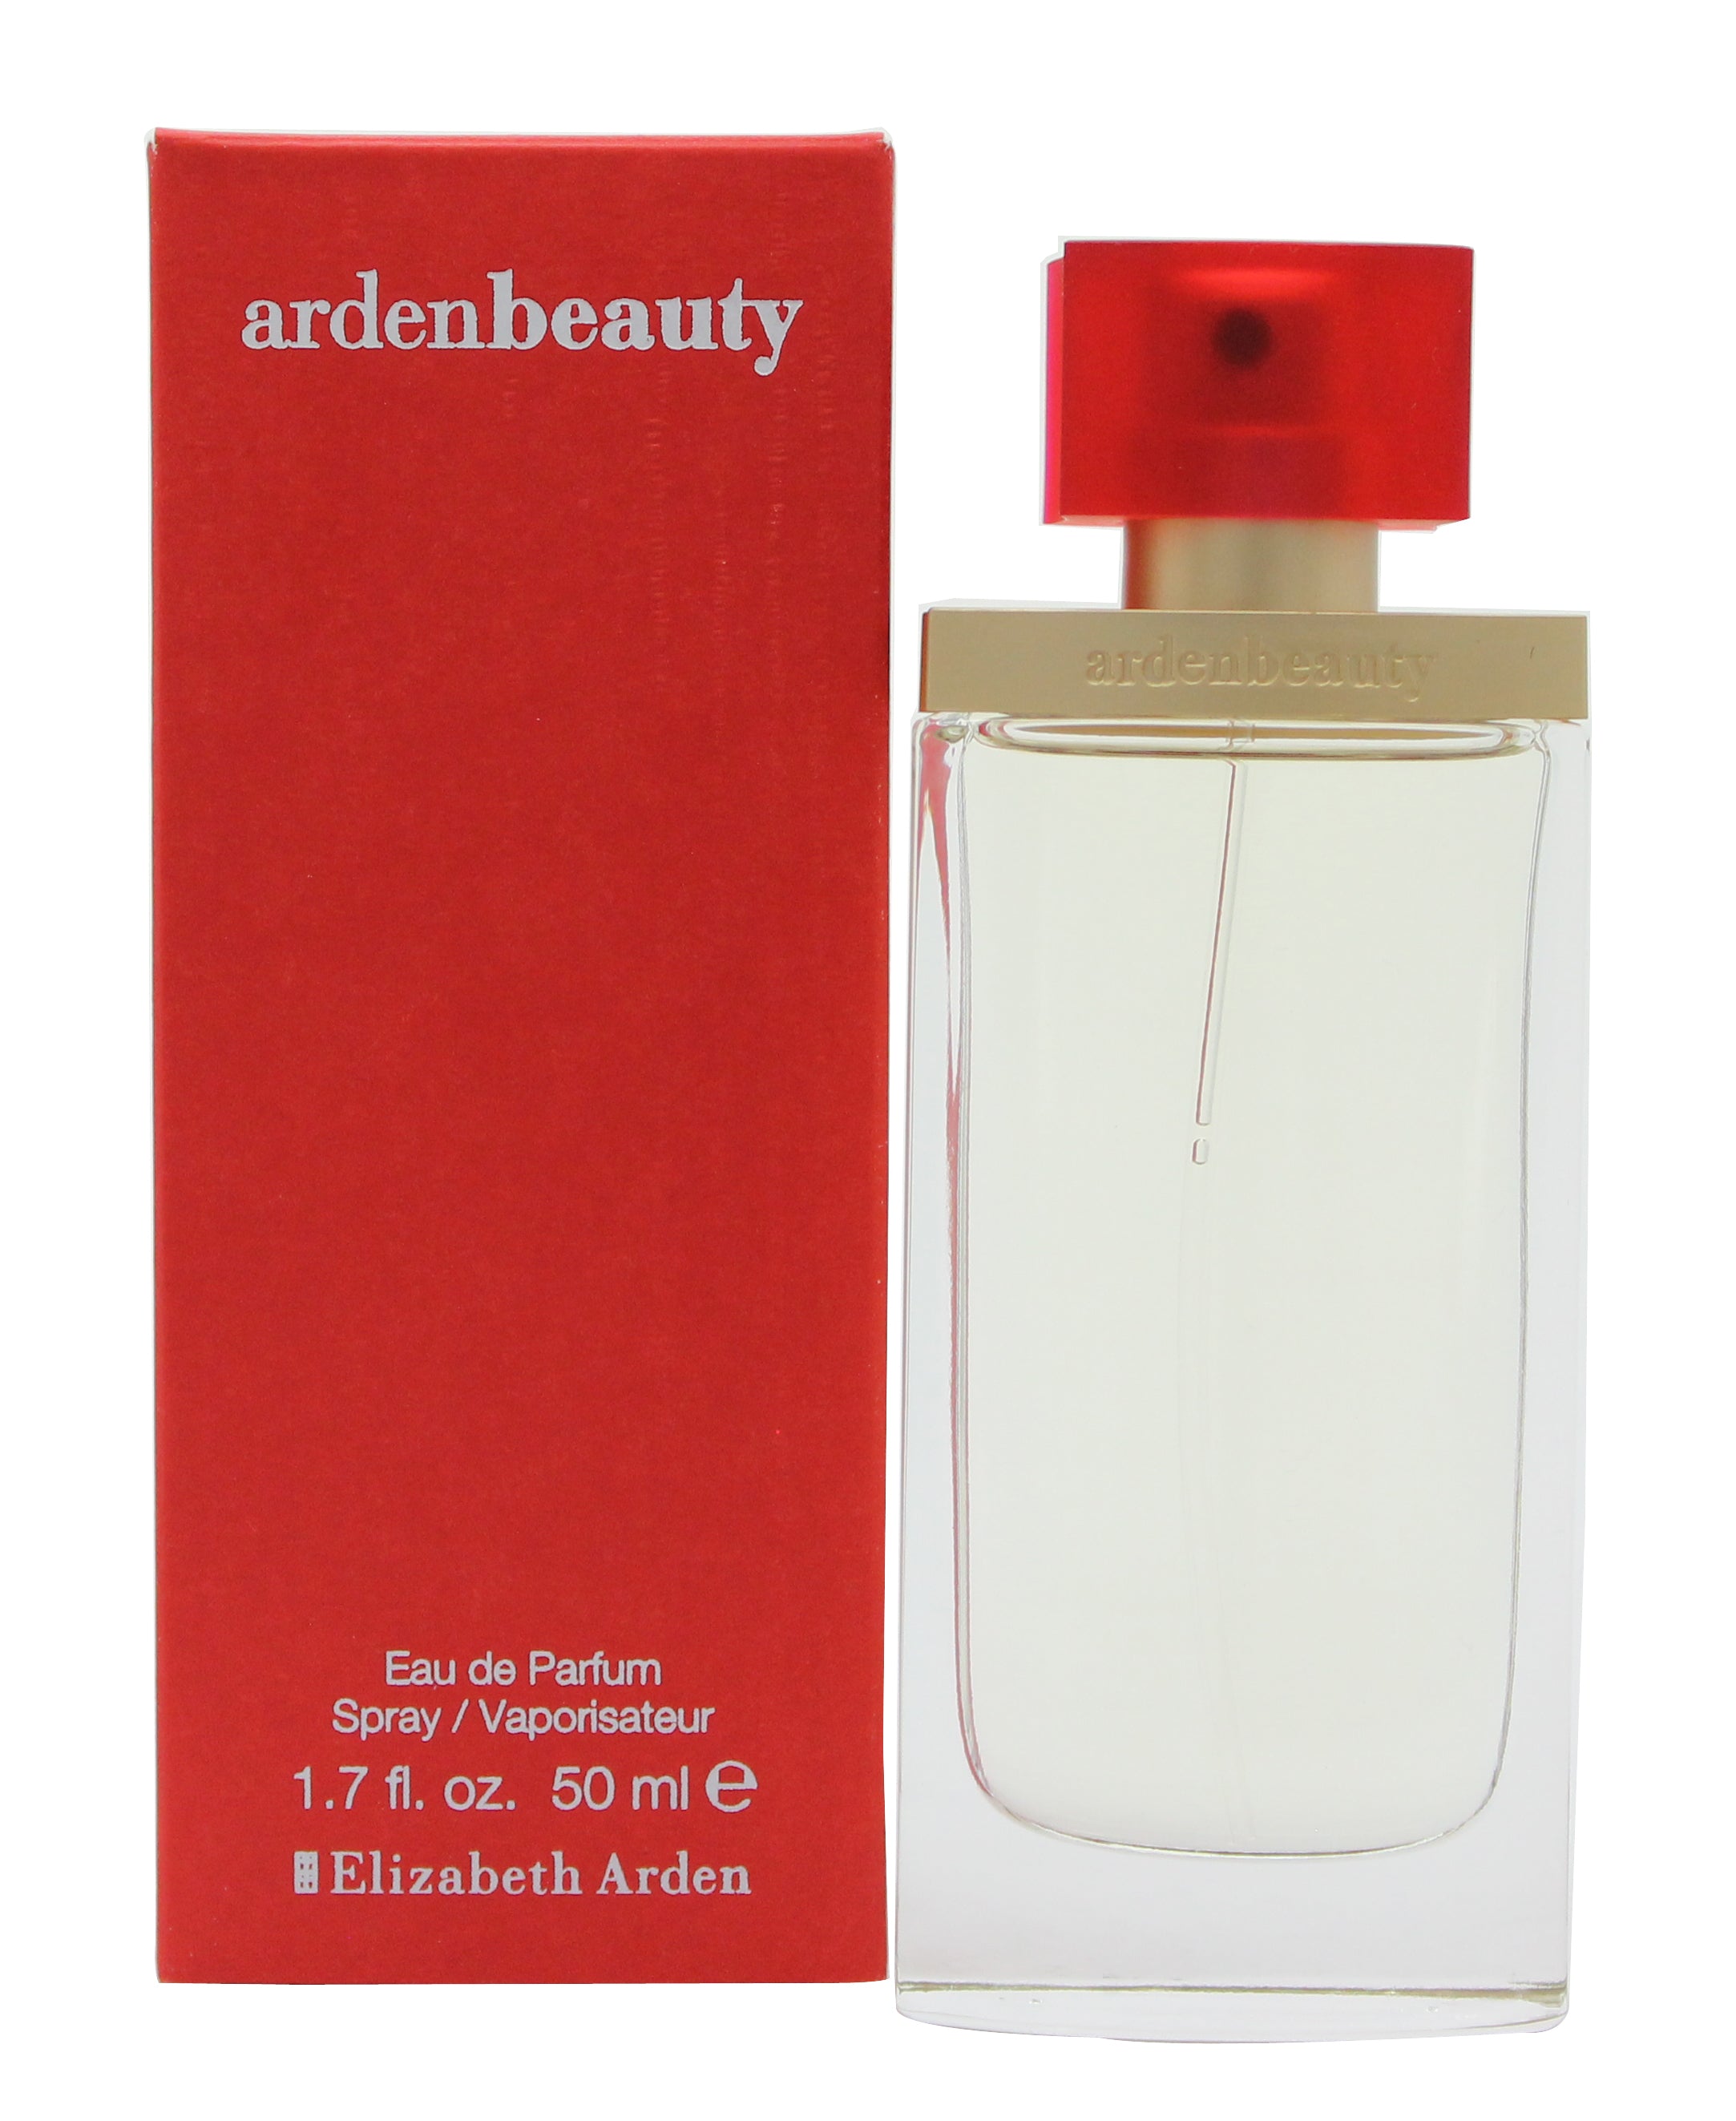 View Elizabeth Arden Beauty Eau de Parfum 50ml Spray information